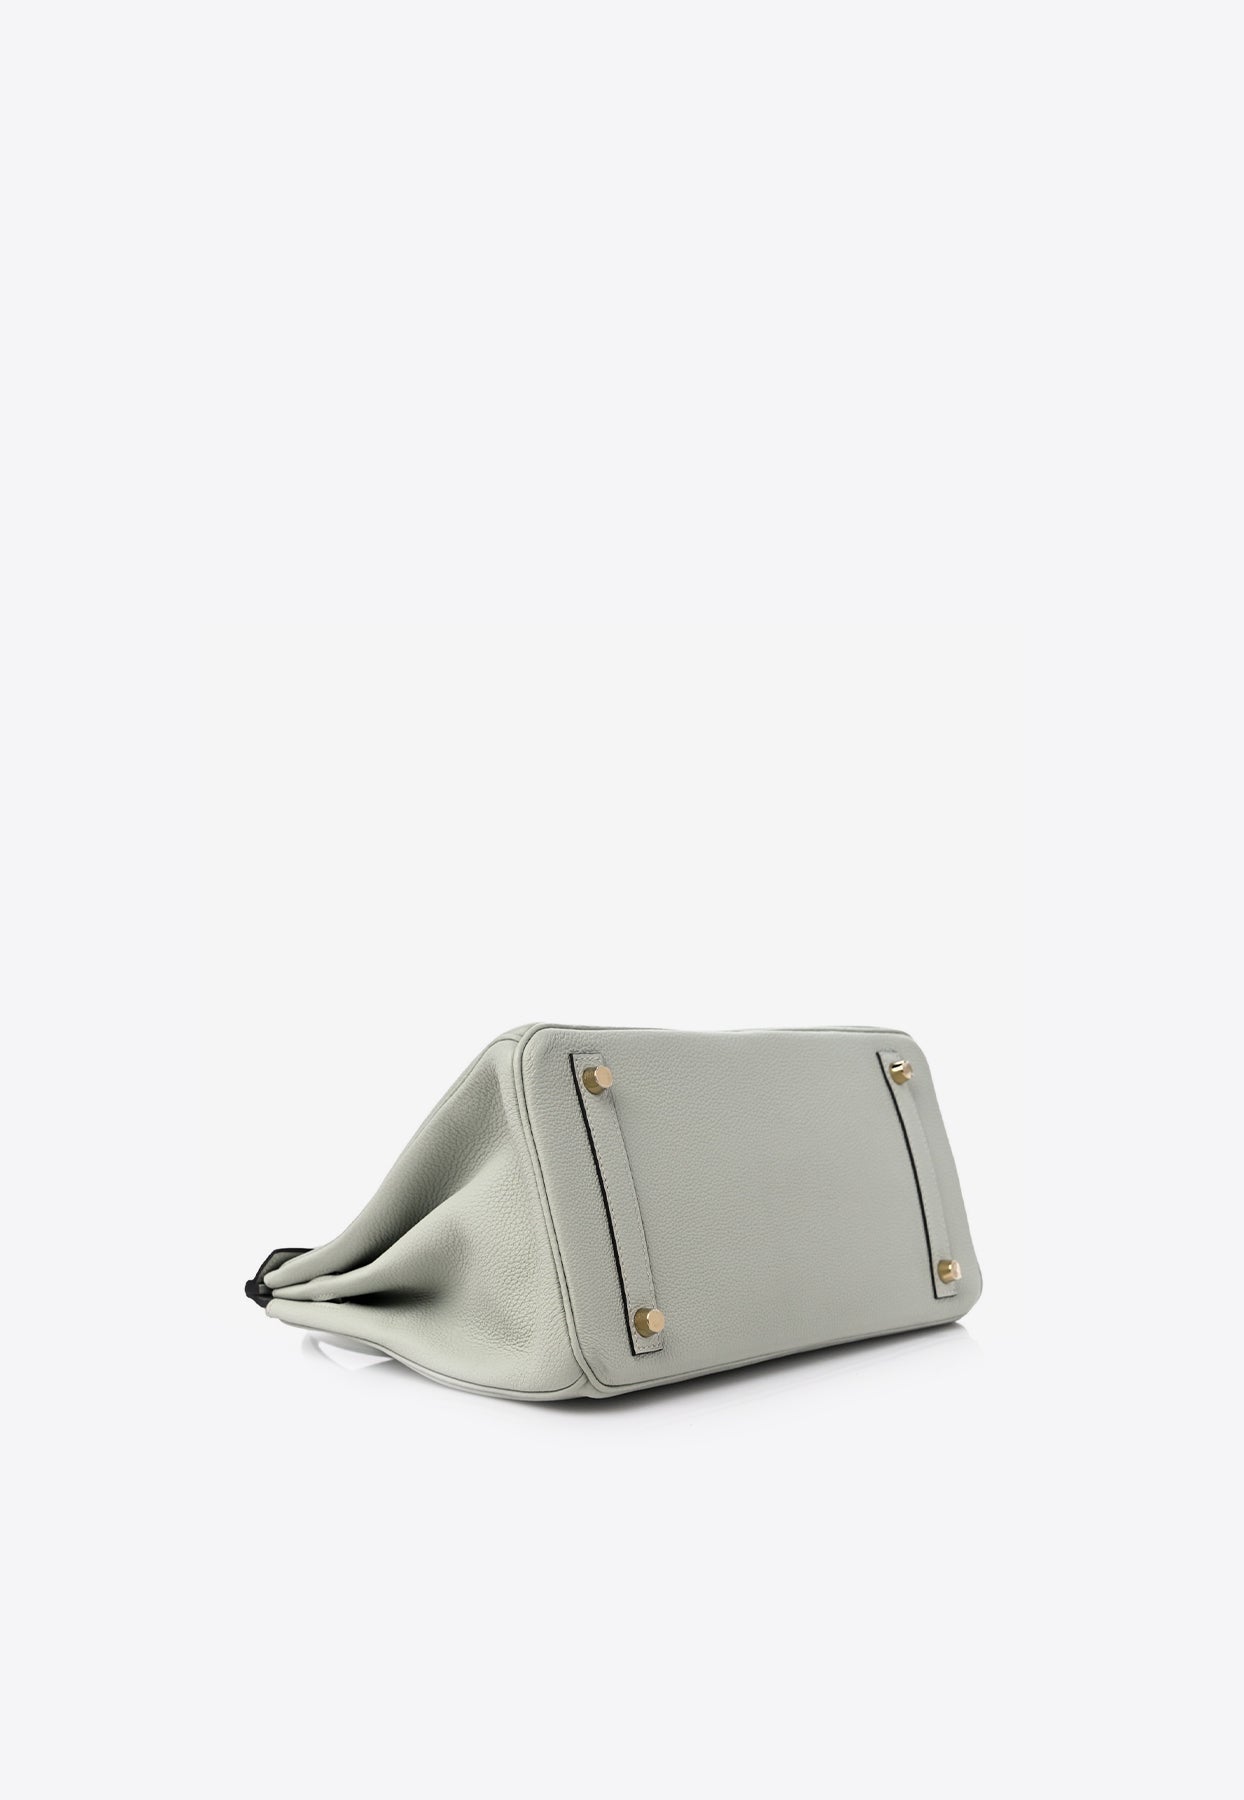 RARE* Hermès Birkin Bag Retourne 30cm in Gris Neve Togo Leather